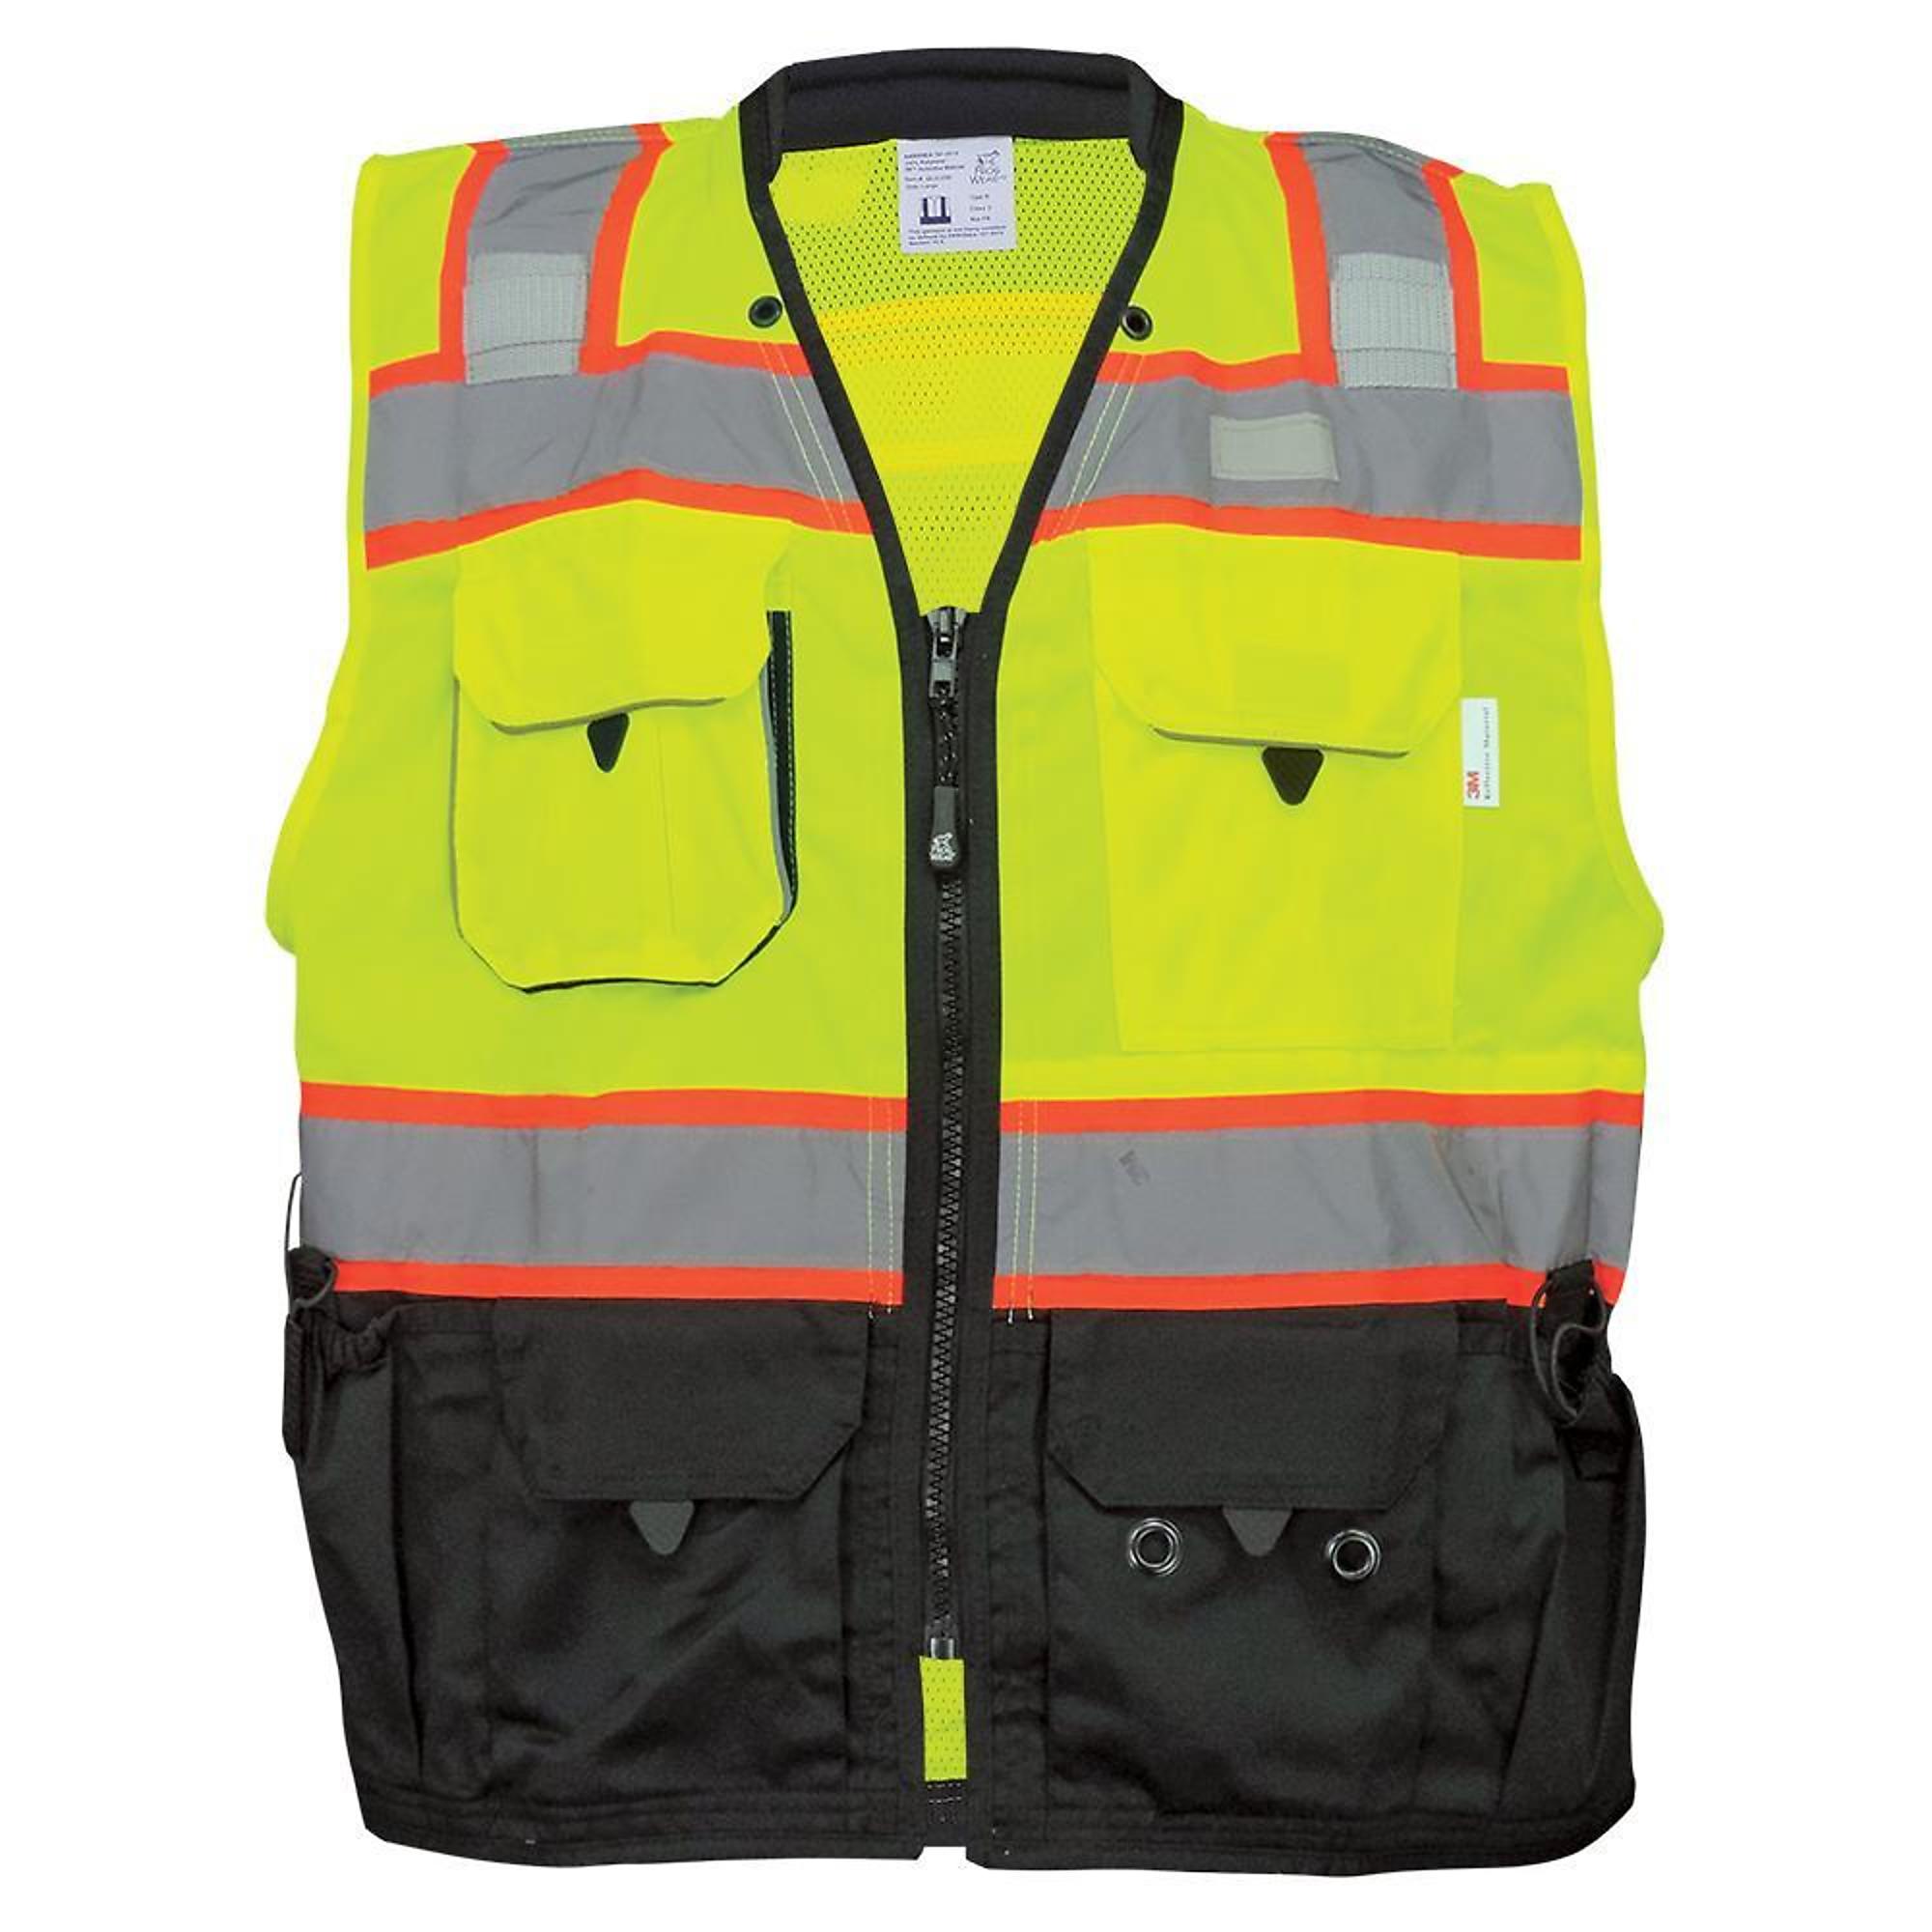 FrogWear Surveyors Safety Vest, XL, Yellow/Green, Model GLO-099-XL